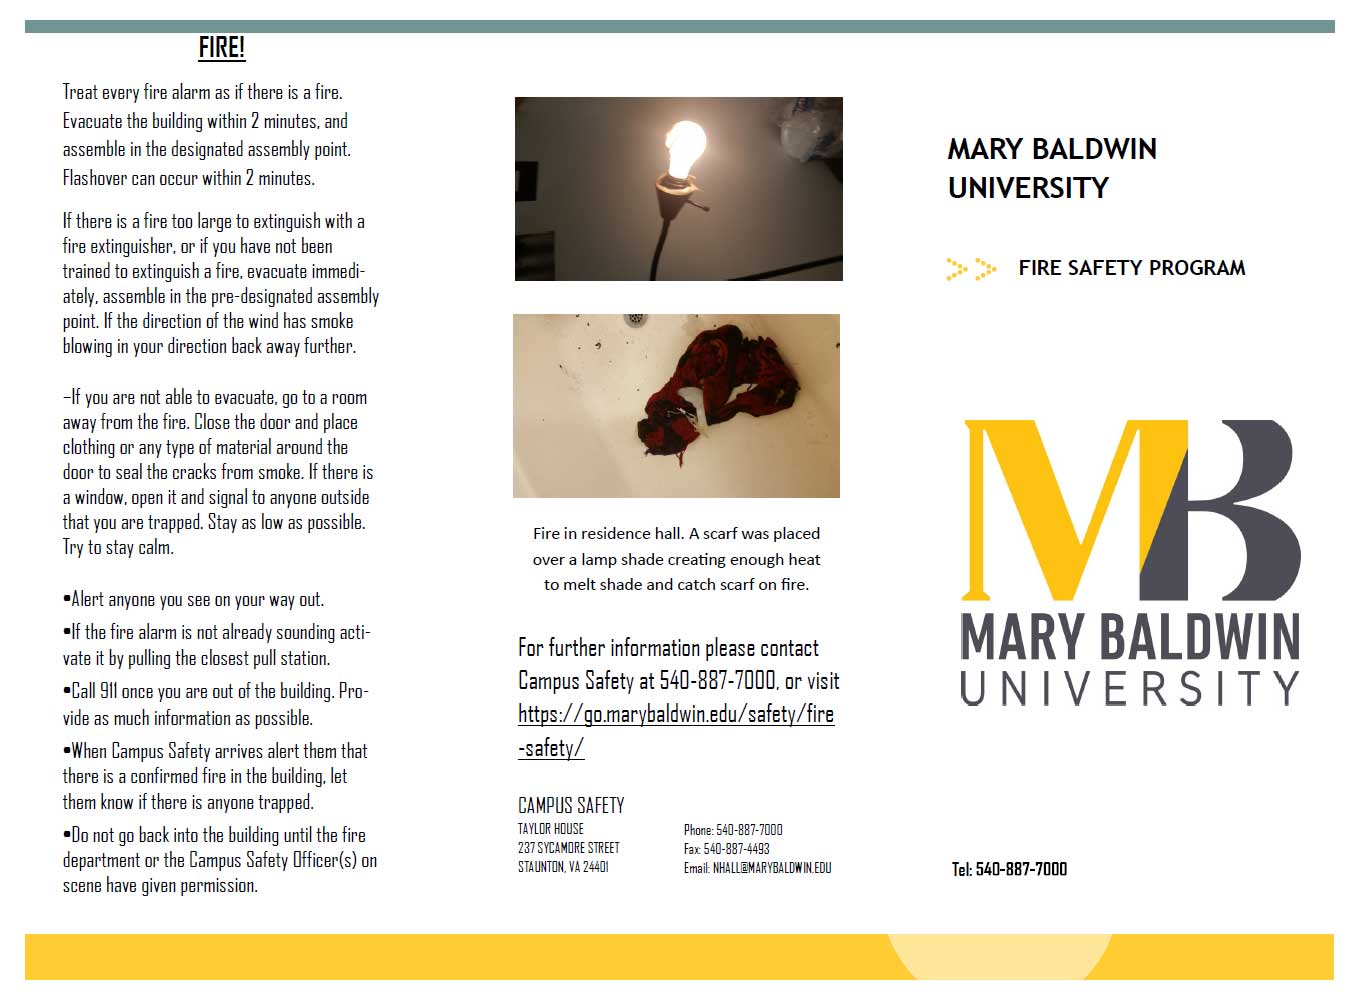 Mary Baldwin Fire Safety Brochure